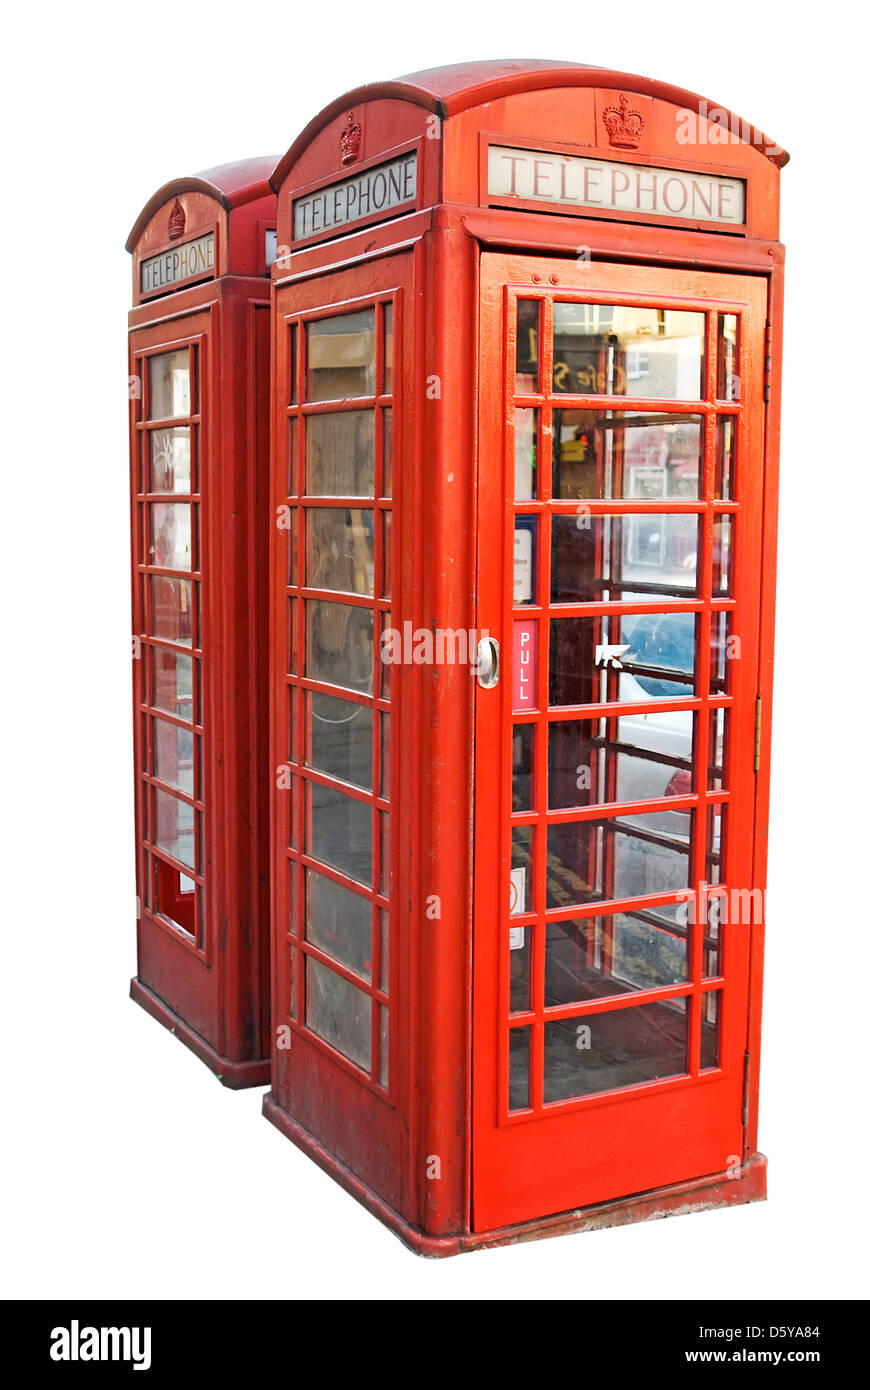 Union Jack Flag Double-deck Bus Phone Box Big Ben British Style Ball Point Pen 